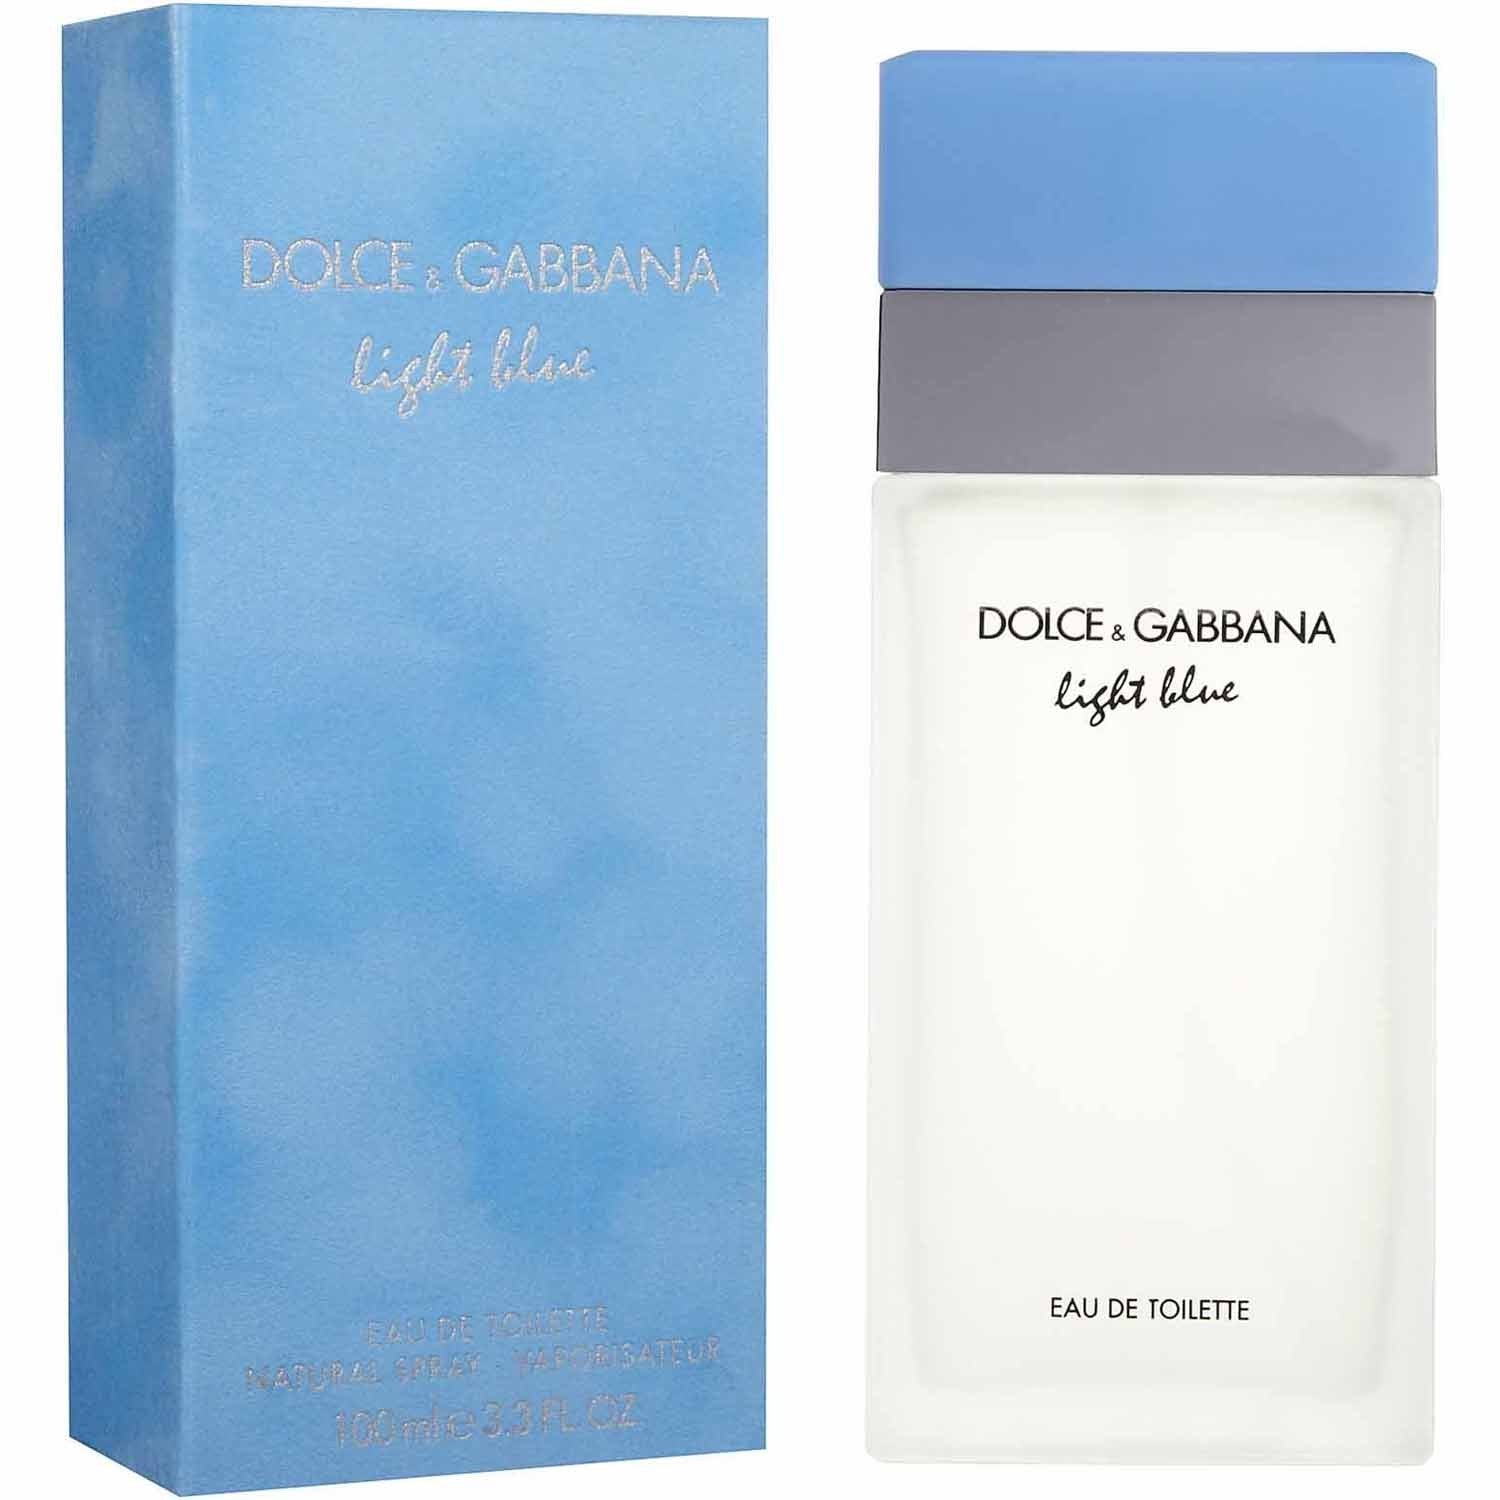 Perfume Light Blue Mujer Dolce Gabbana Edt 100ml Original